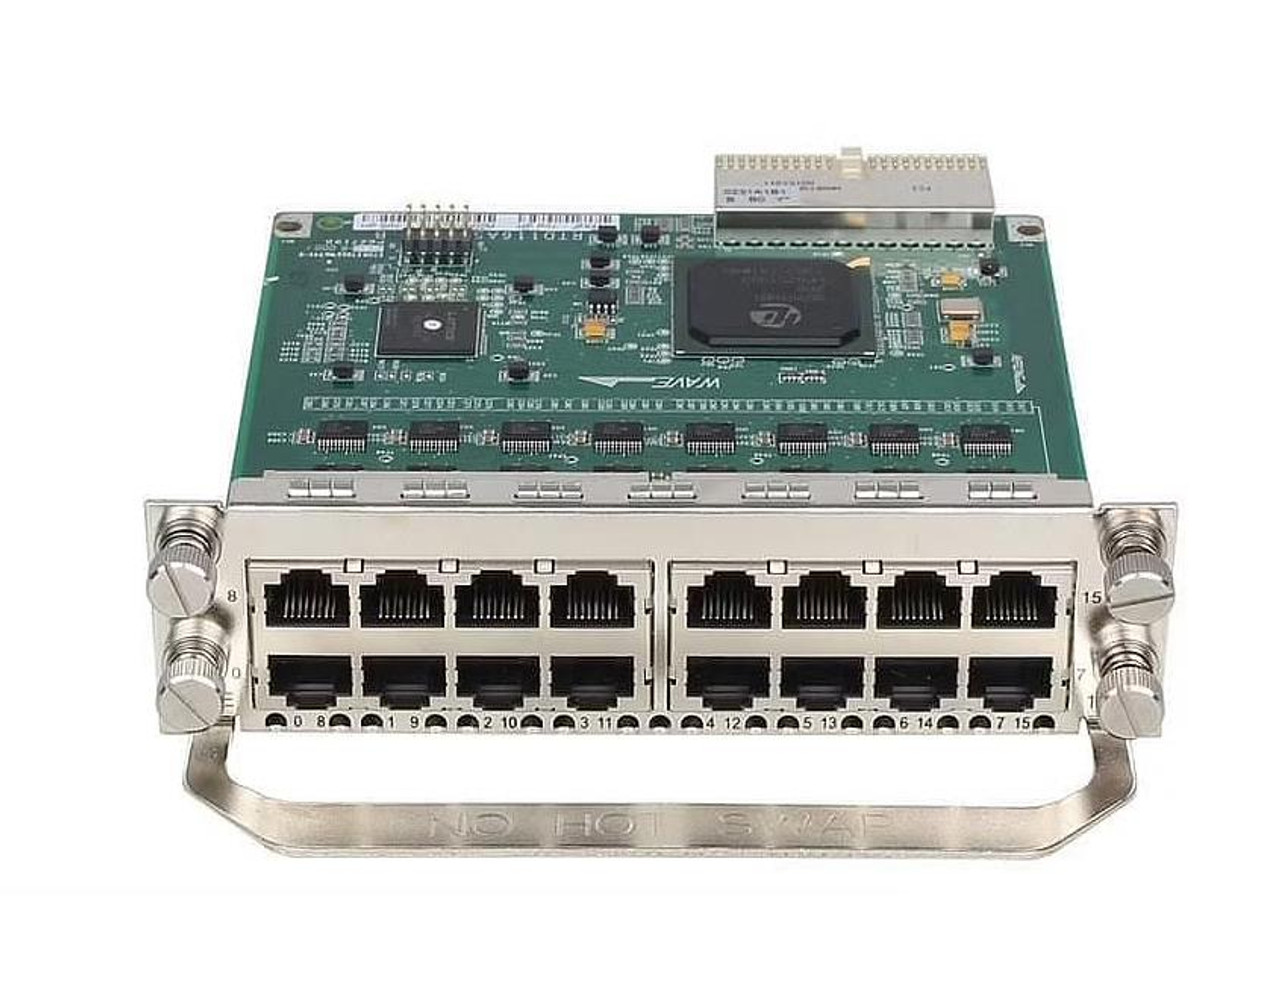 0231A55Q 3Com 16-Port Asynchronous Serial Interface Module 16 x Asynchronous Serial WAN Interface Module (Refurbished)